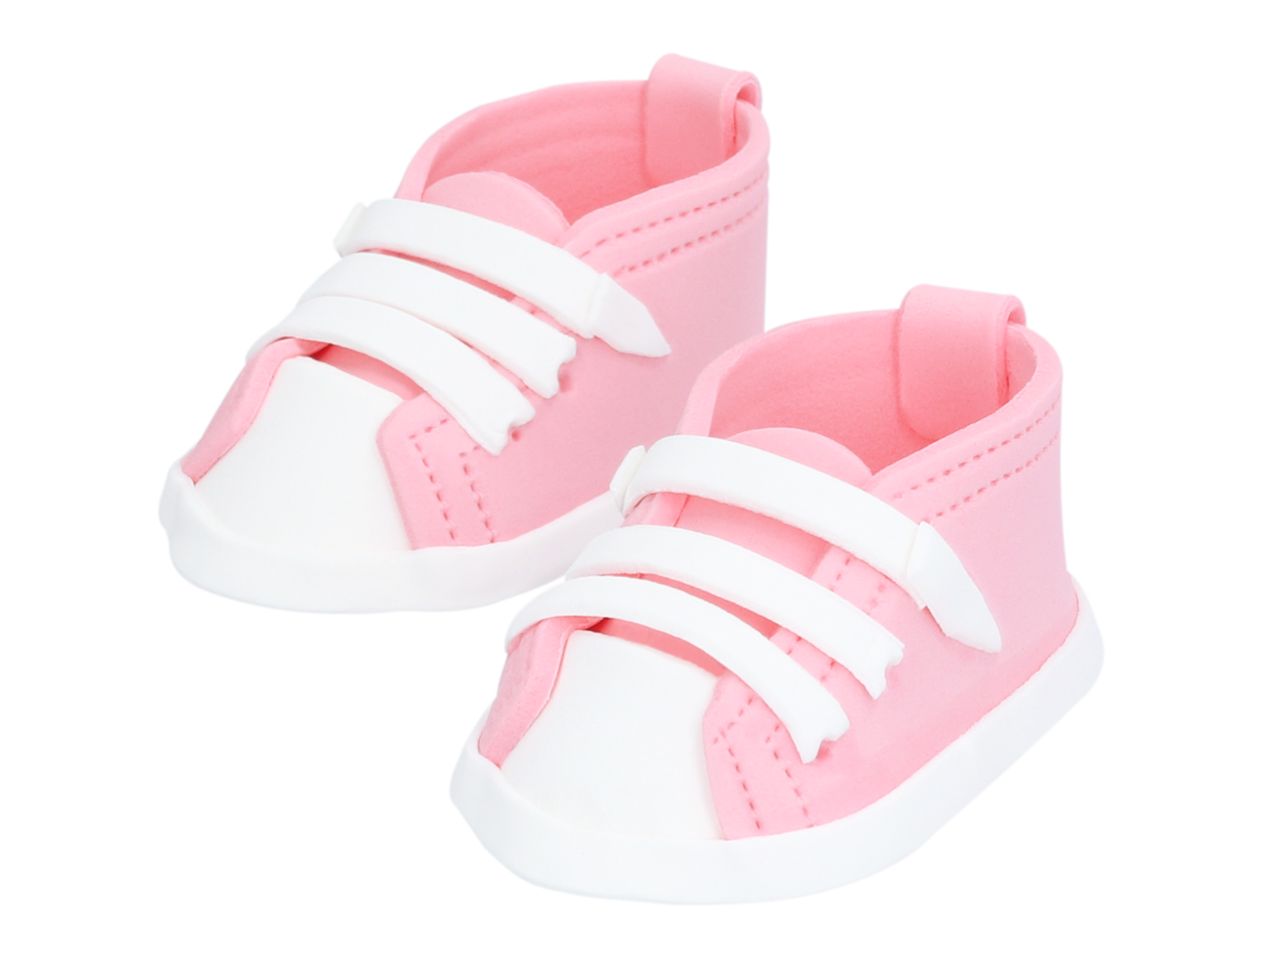 3D-Zuckerfigur Babyschuhe Rosa, Pink & Weiß, 1 Paar/2 Stück á 9 x 5,5 x 3,5 cm